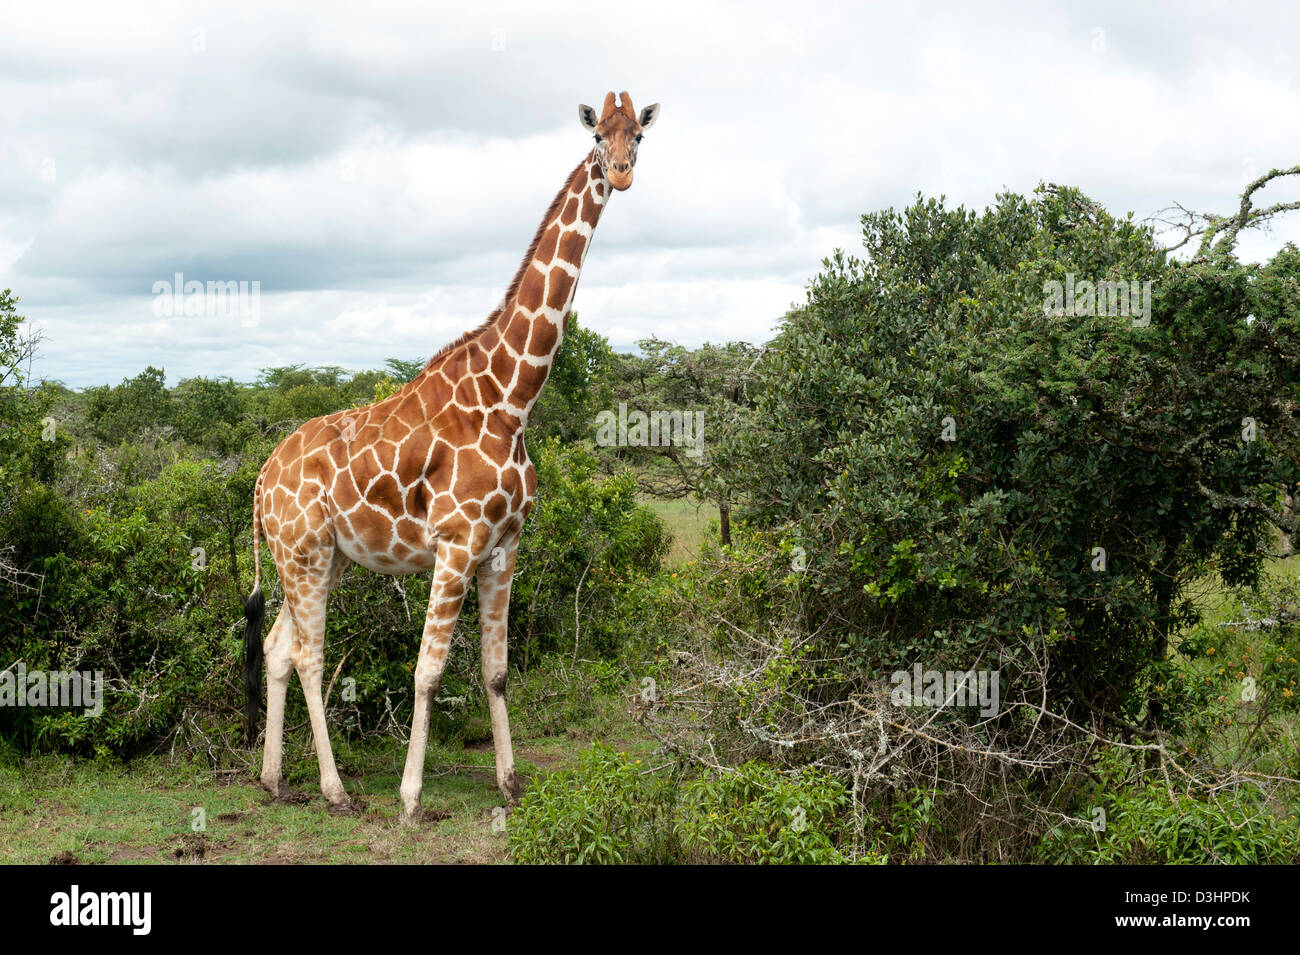 Giraffa reticolata ( Giraffa camelopardalis reticulata), Ol Pejeta Wildlife Conservancy, Laikipia, Kenya Foto Stock